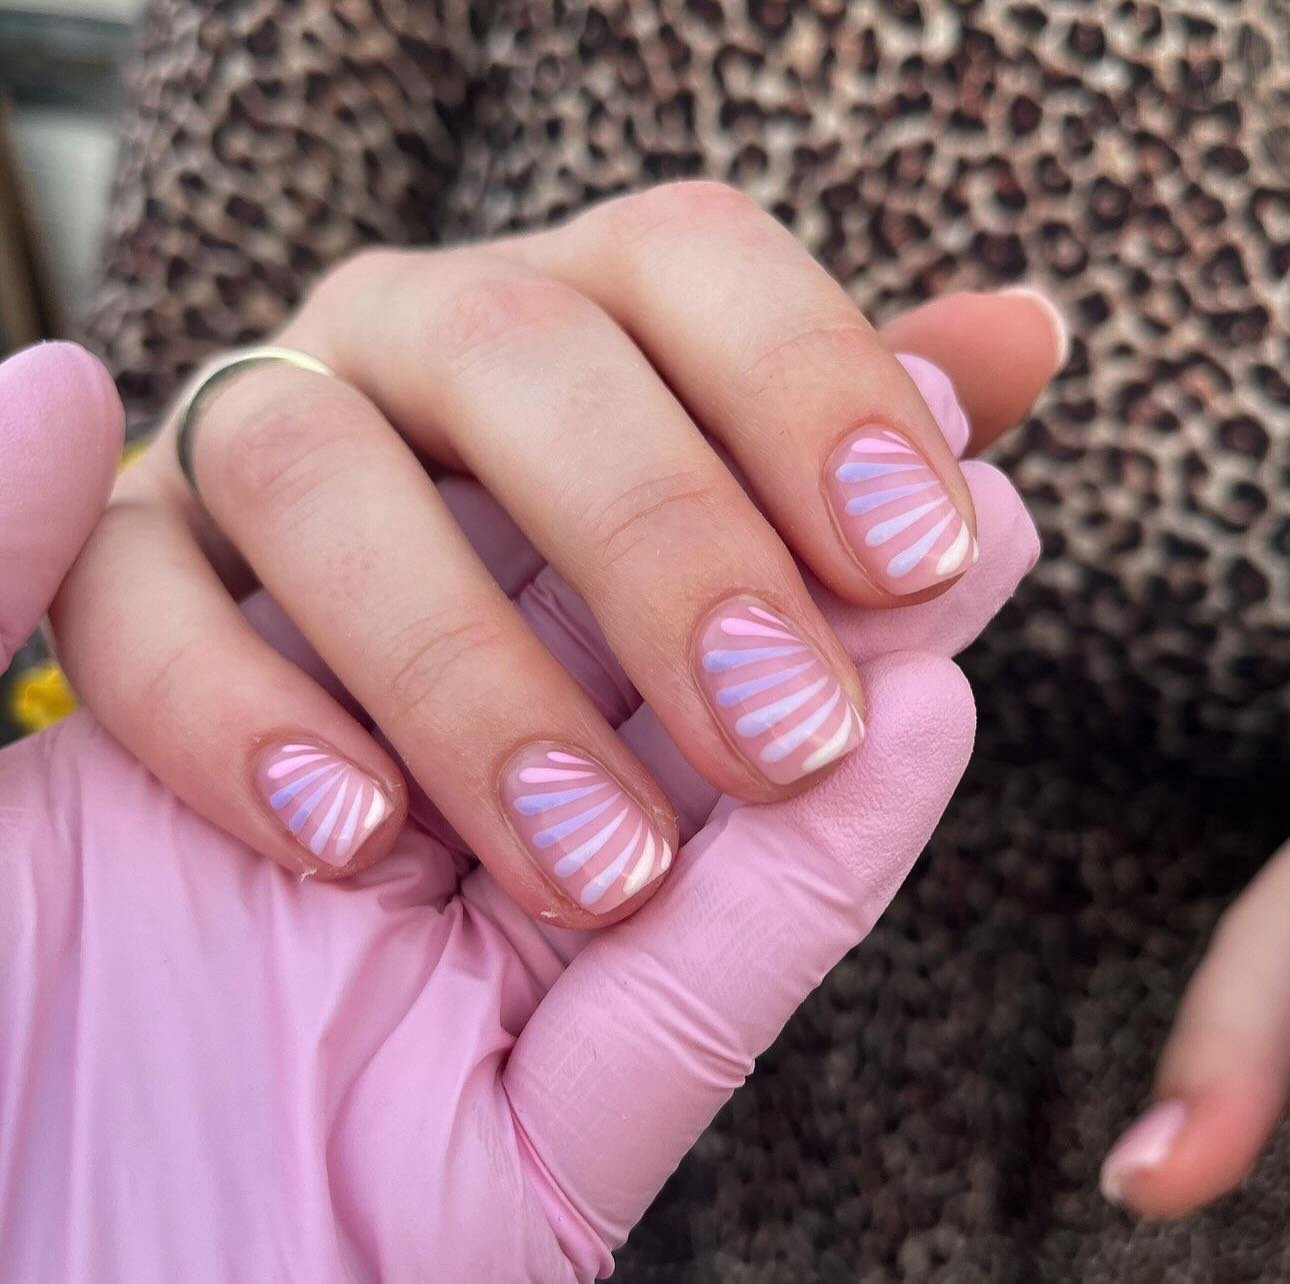 sᴘʀɪɴɢ ɴᴀɪʟ sᴇᴛ ʙʏ ɴɪᴋᴋɪ 

@_nikki_nails_ 
ᴀᴠᴀɪʟᴀʙʟᴇ ᴏɴ ᴍᴏɴᴅᴀʏs ᴀɴᴅ ᴛᴜᴇsᴅᴀʏs 
@afbeautystudio

#nails #nailart #nailsofinstagram #manicure #nailsoftheday #gelnails #beauty #nailsart #nail #nailsdesign #naildesign #nailtech #acrylicnails #nailsonfleek